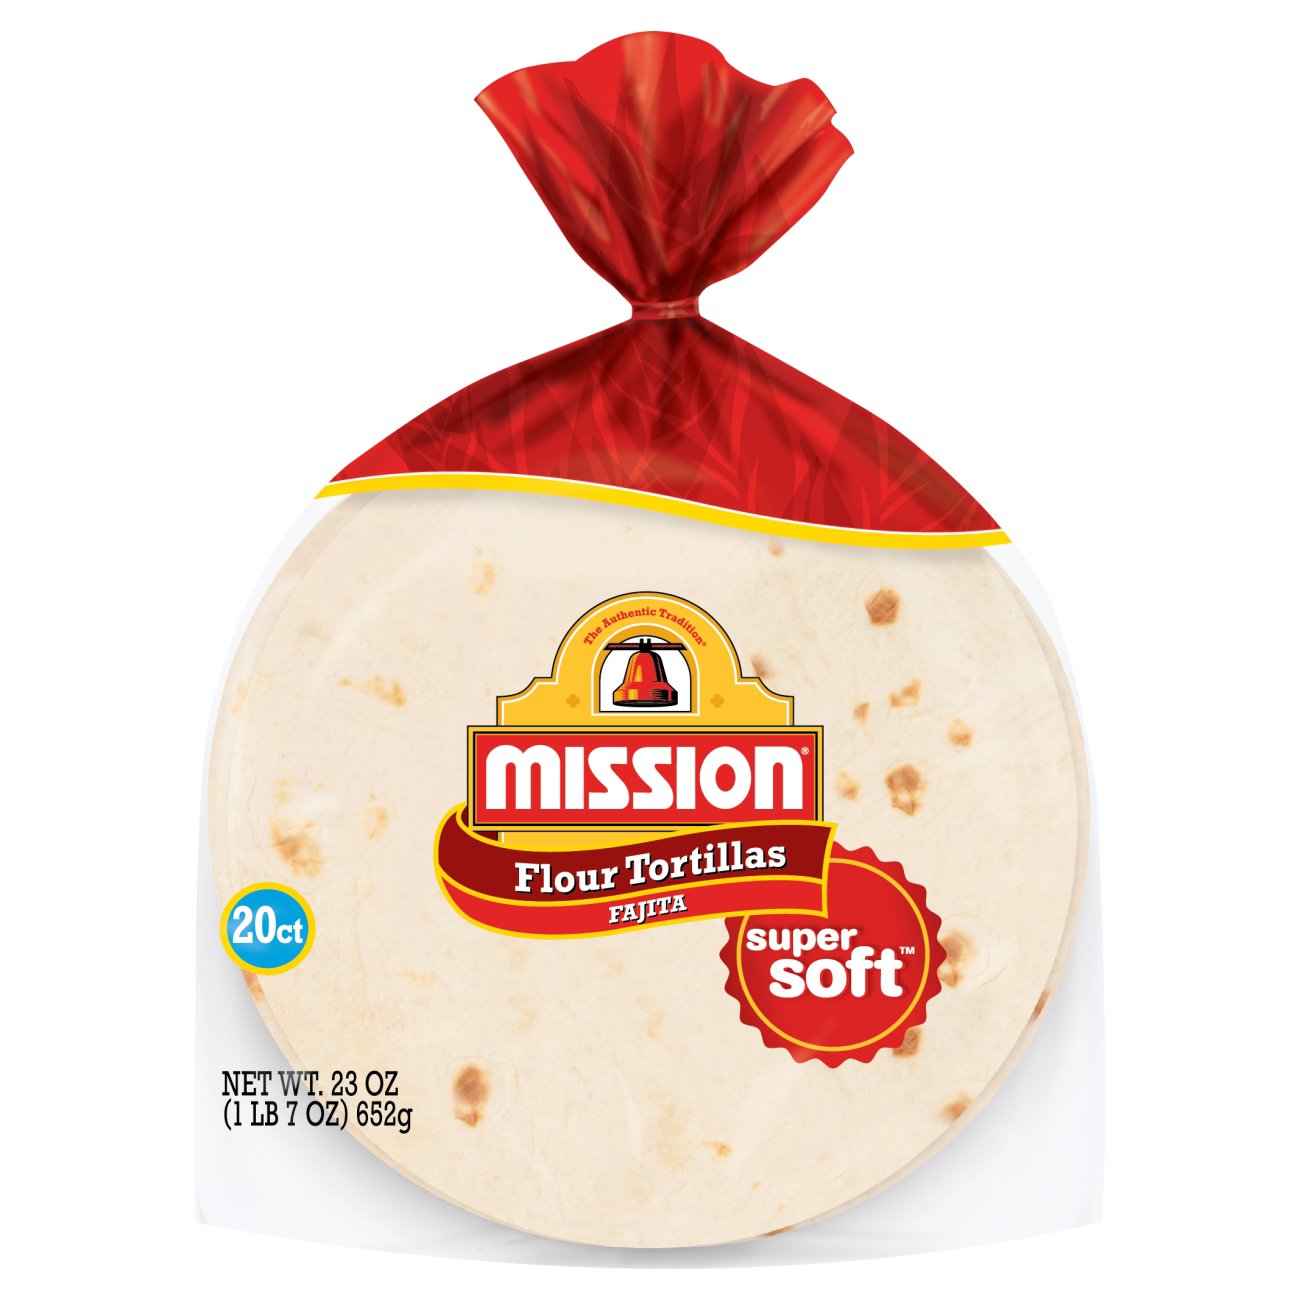 Mission Super Soft Mission Flour Tortillas Fajita Size Shop Tortillas